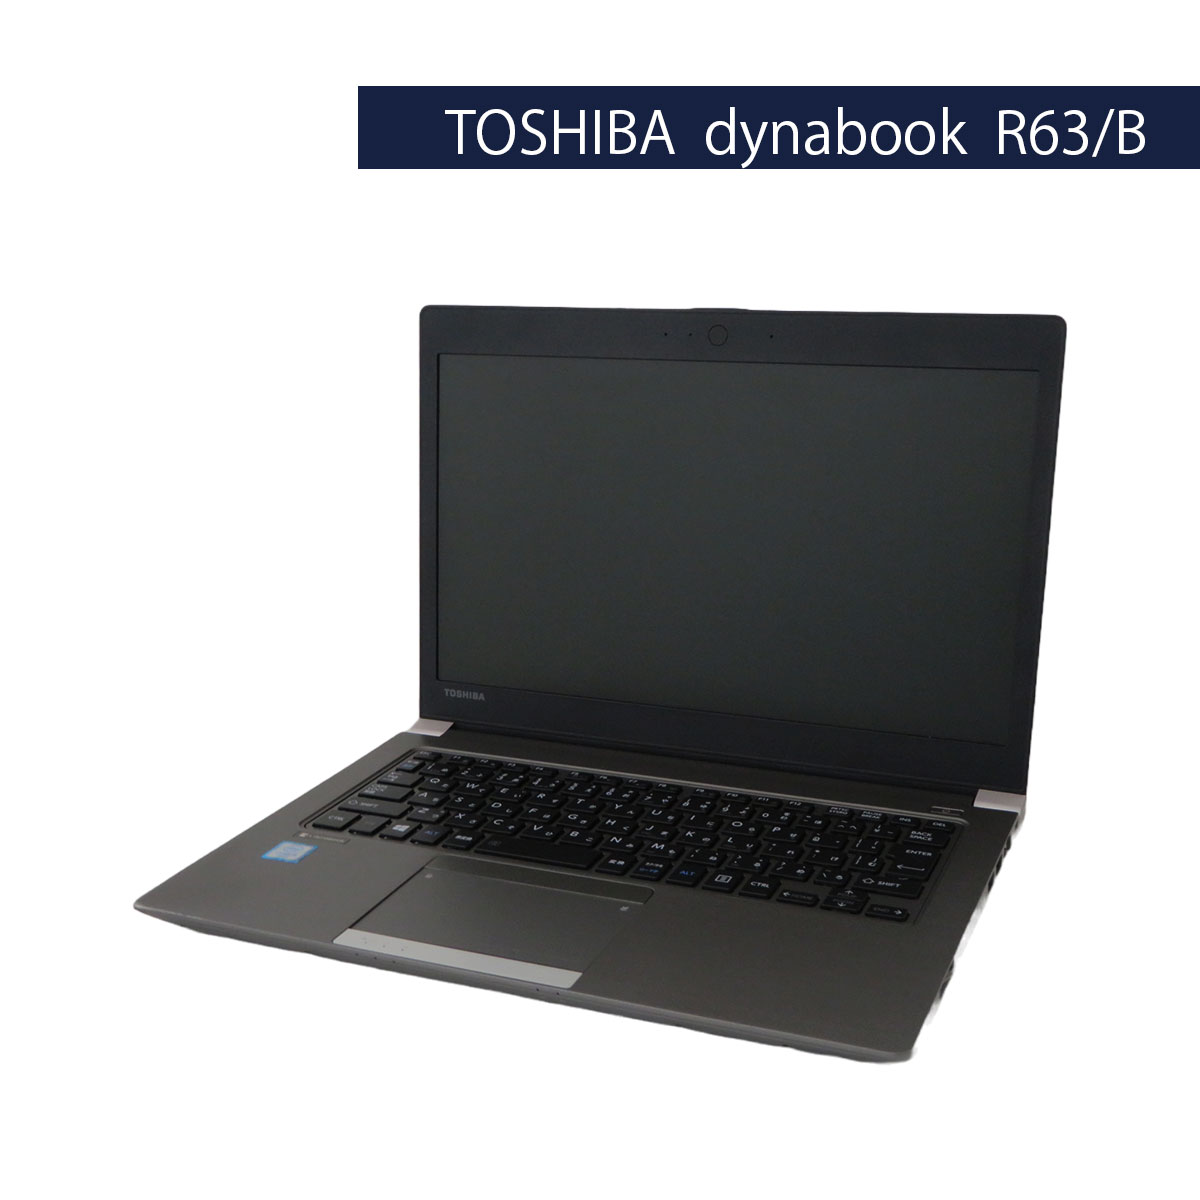 第6世代Corei5 SSD搭載 TOSHIBA dynabook R63/B Core i5 6300U (Win10Pro)